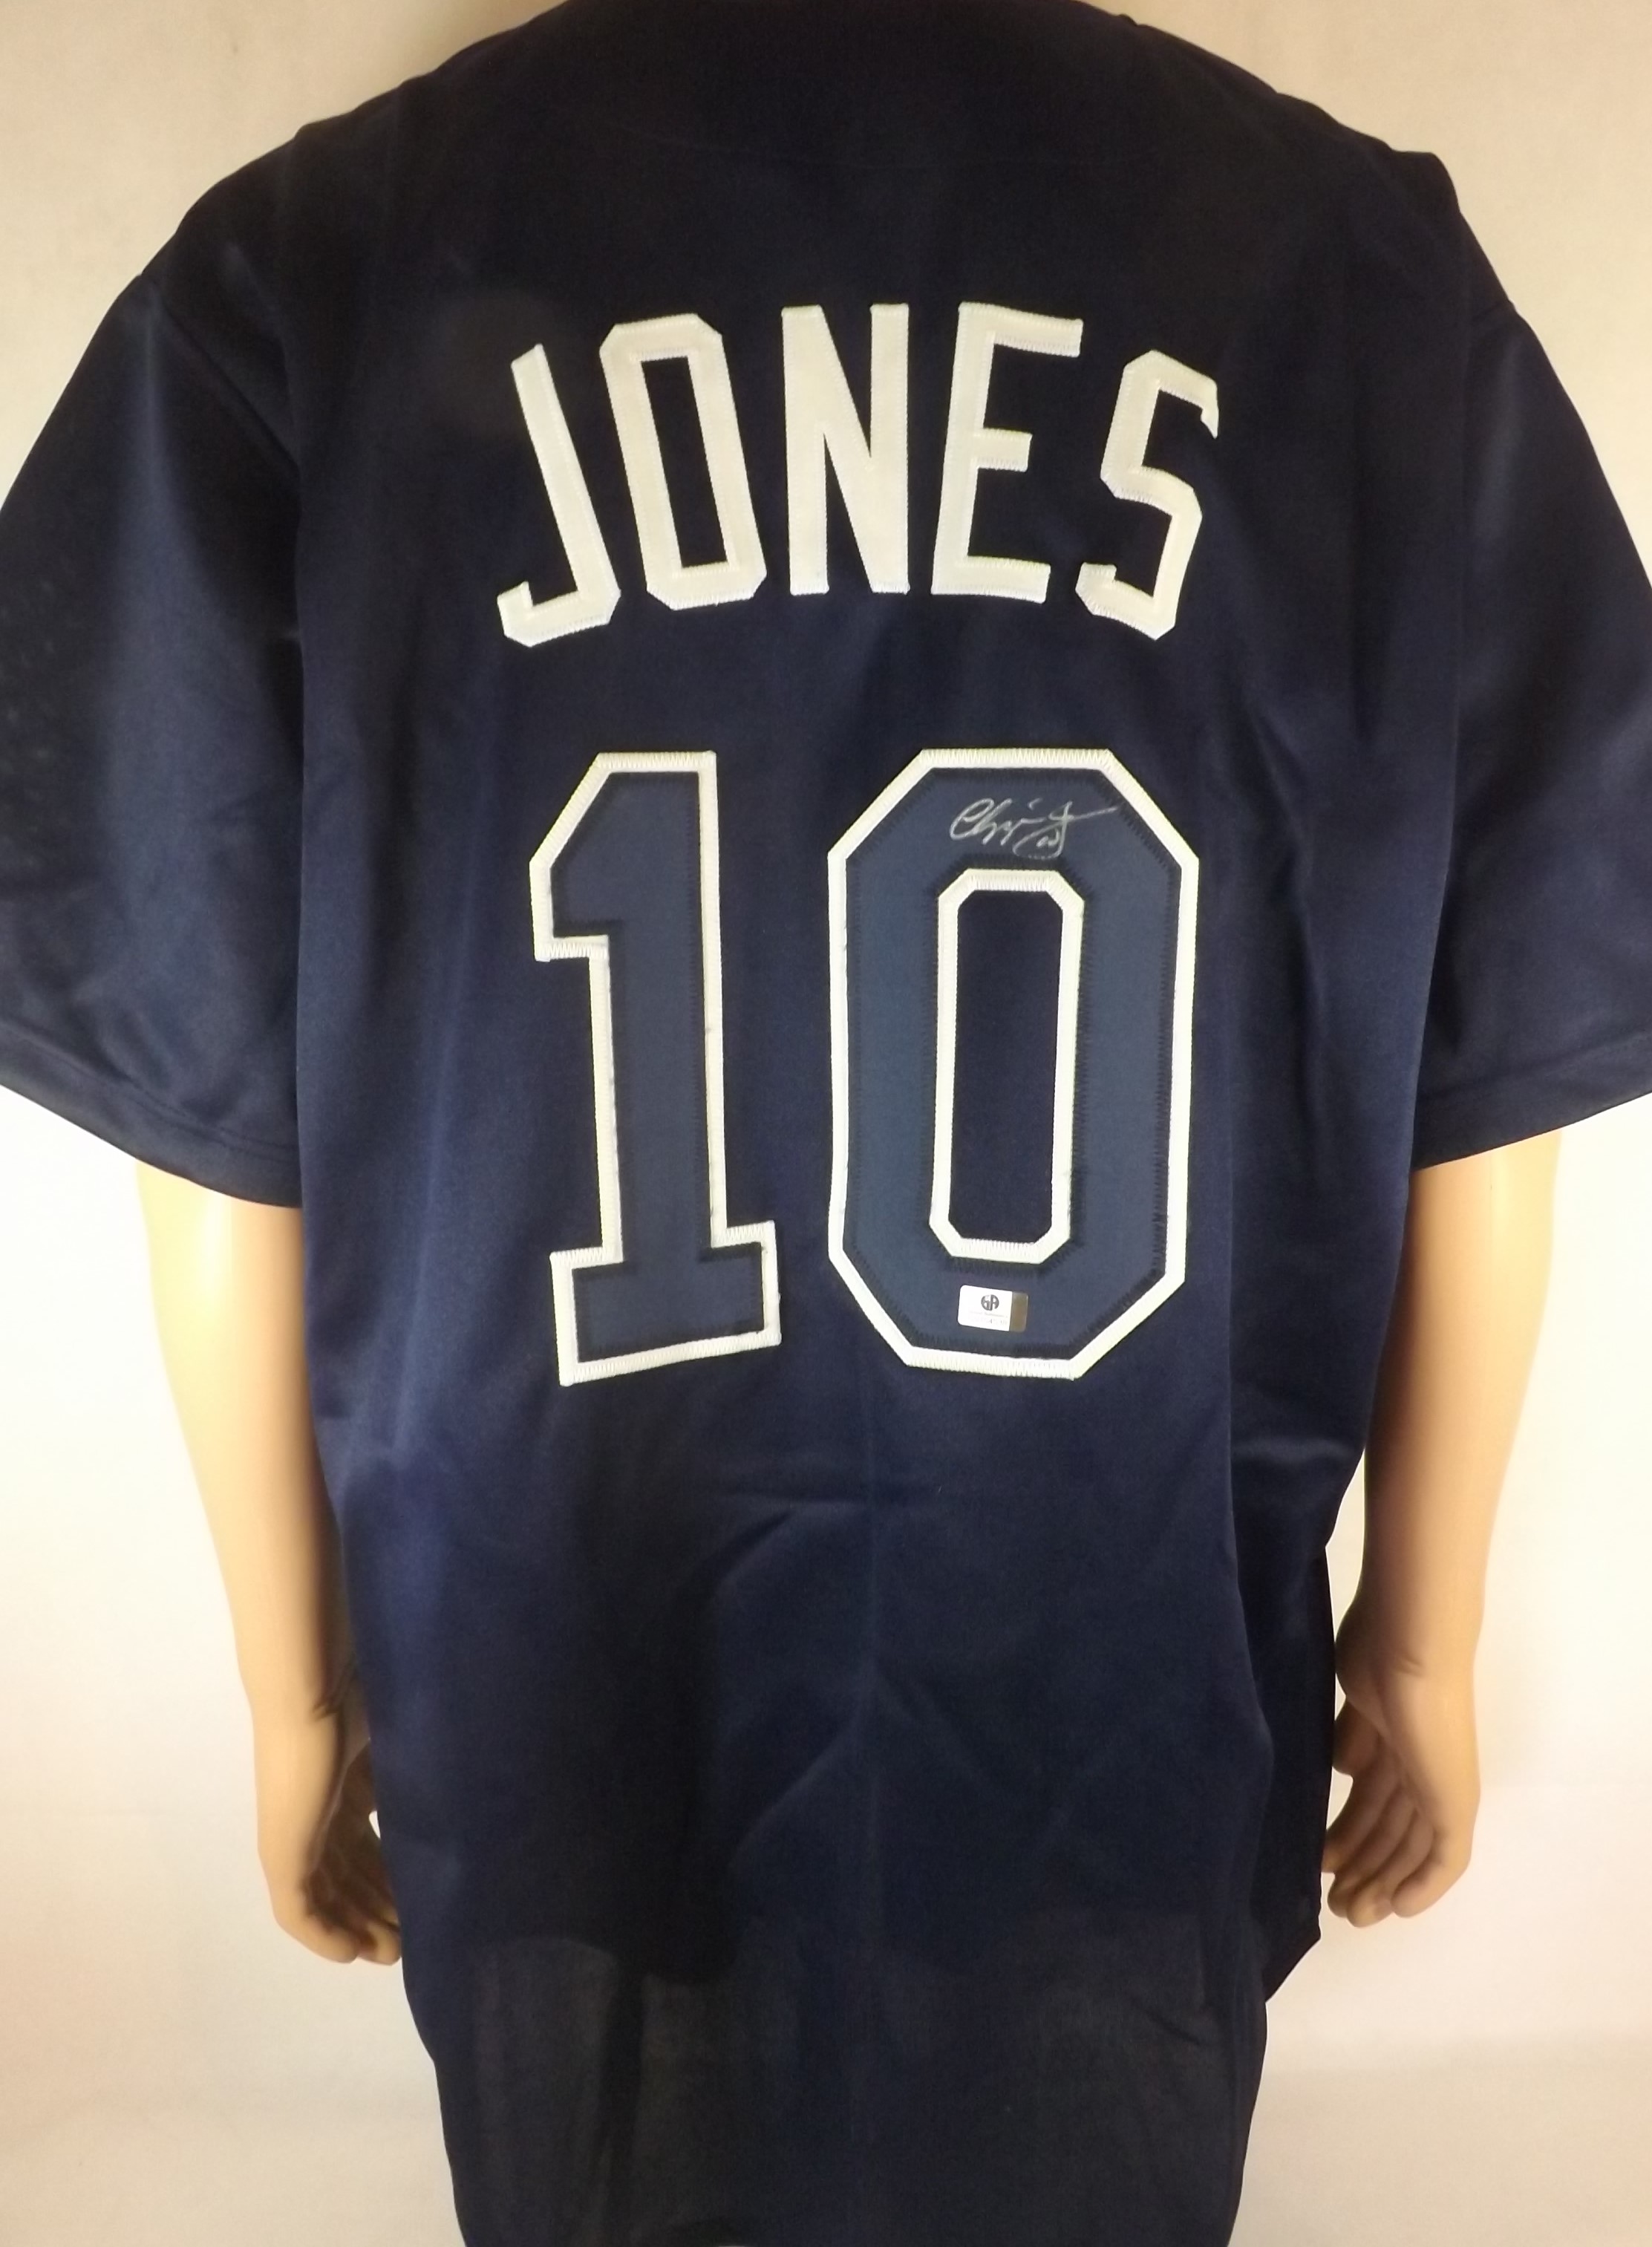 Chipper Jones Atlanta Braves Signed Baseball Jersey Certified